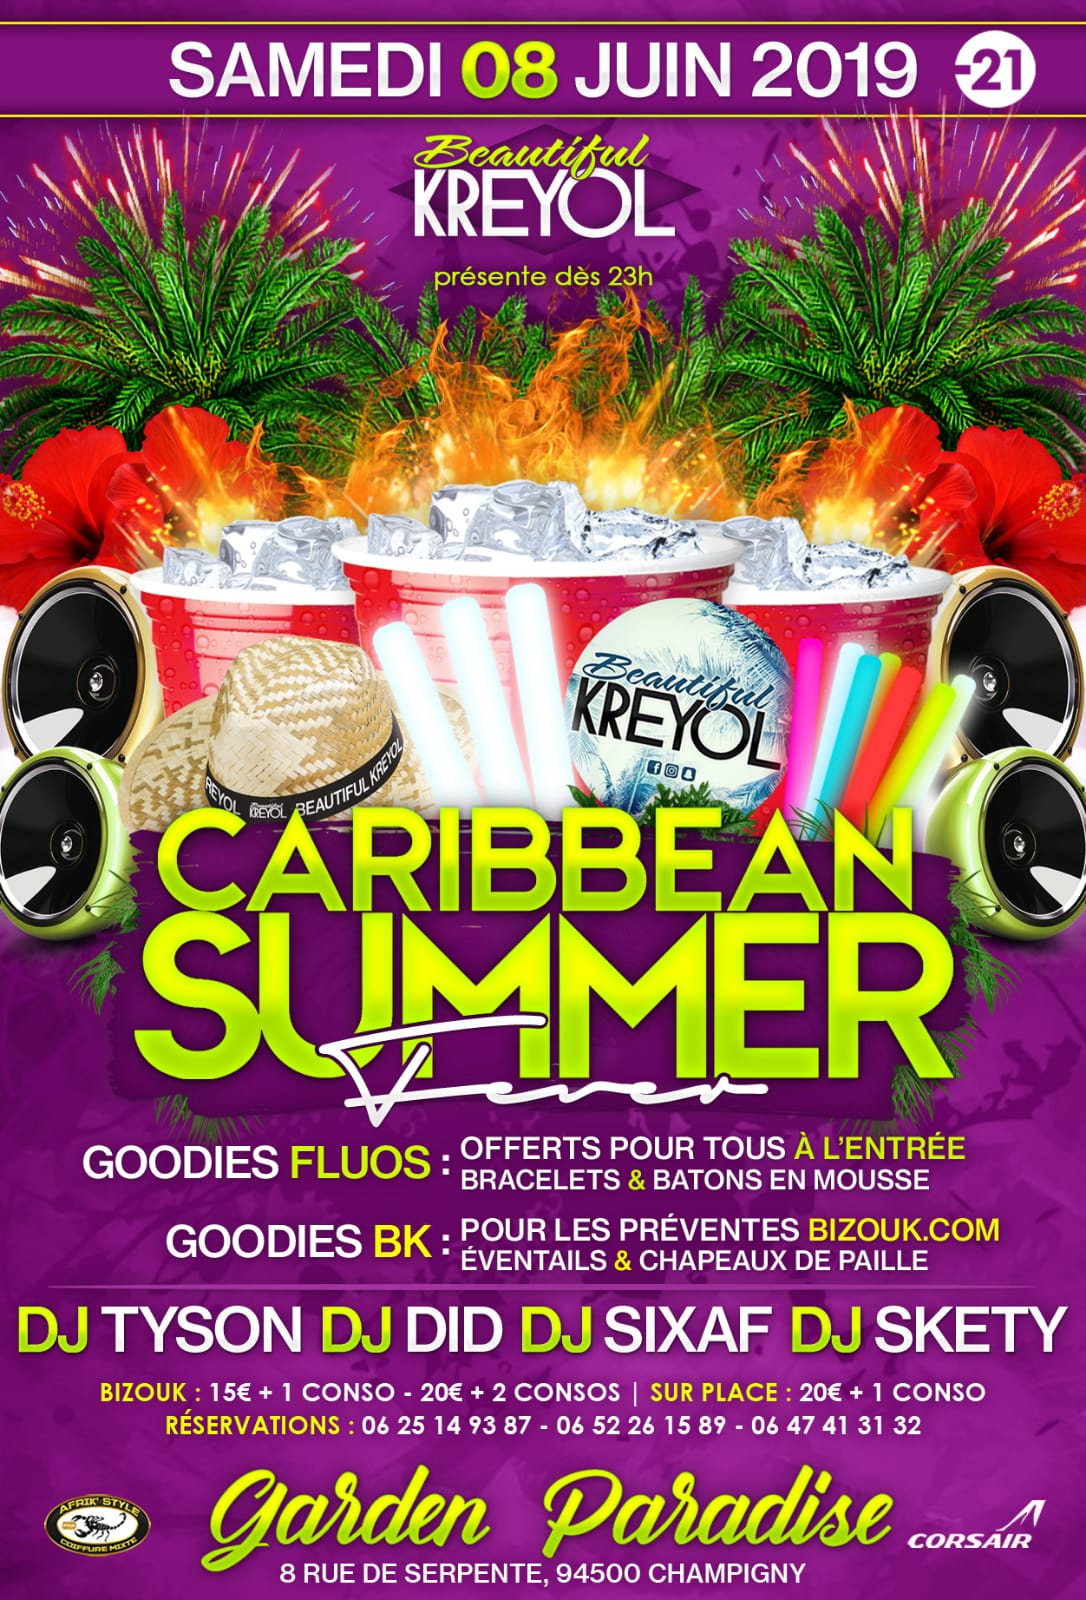 Beautiful Kreyol (bk) : Caribbean Summer Fever